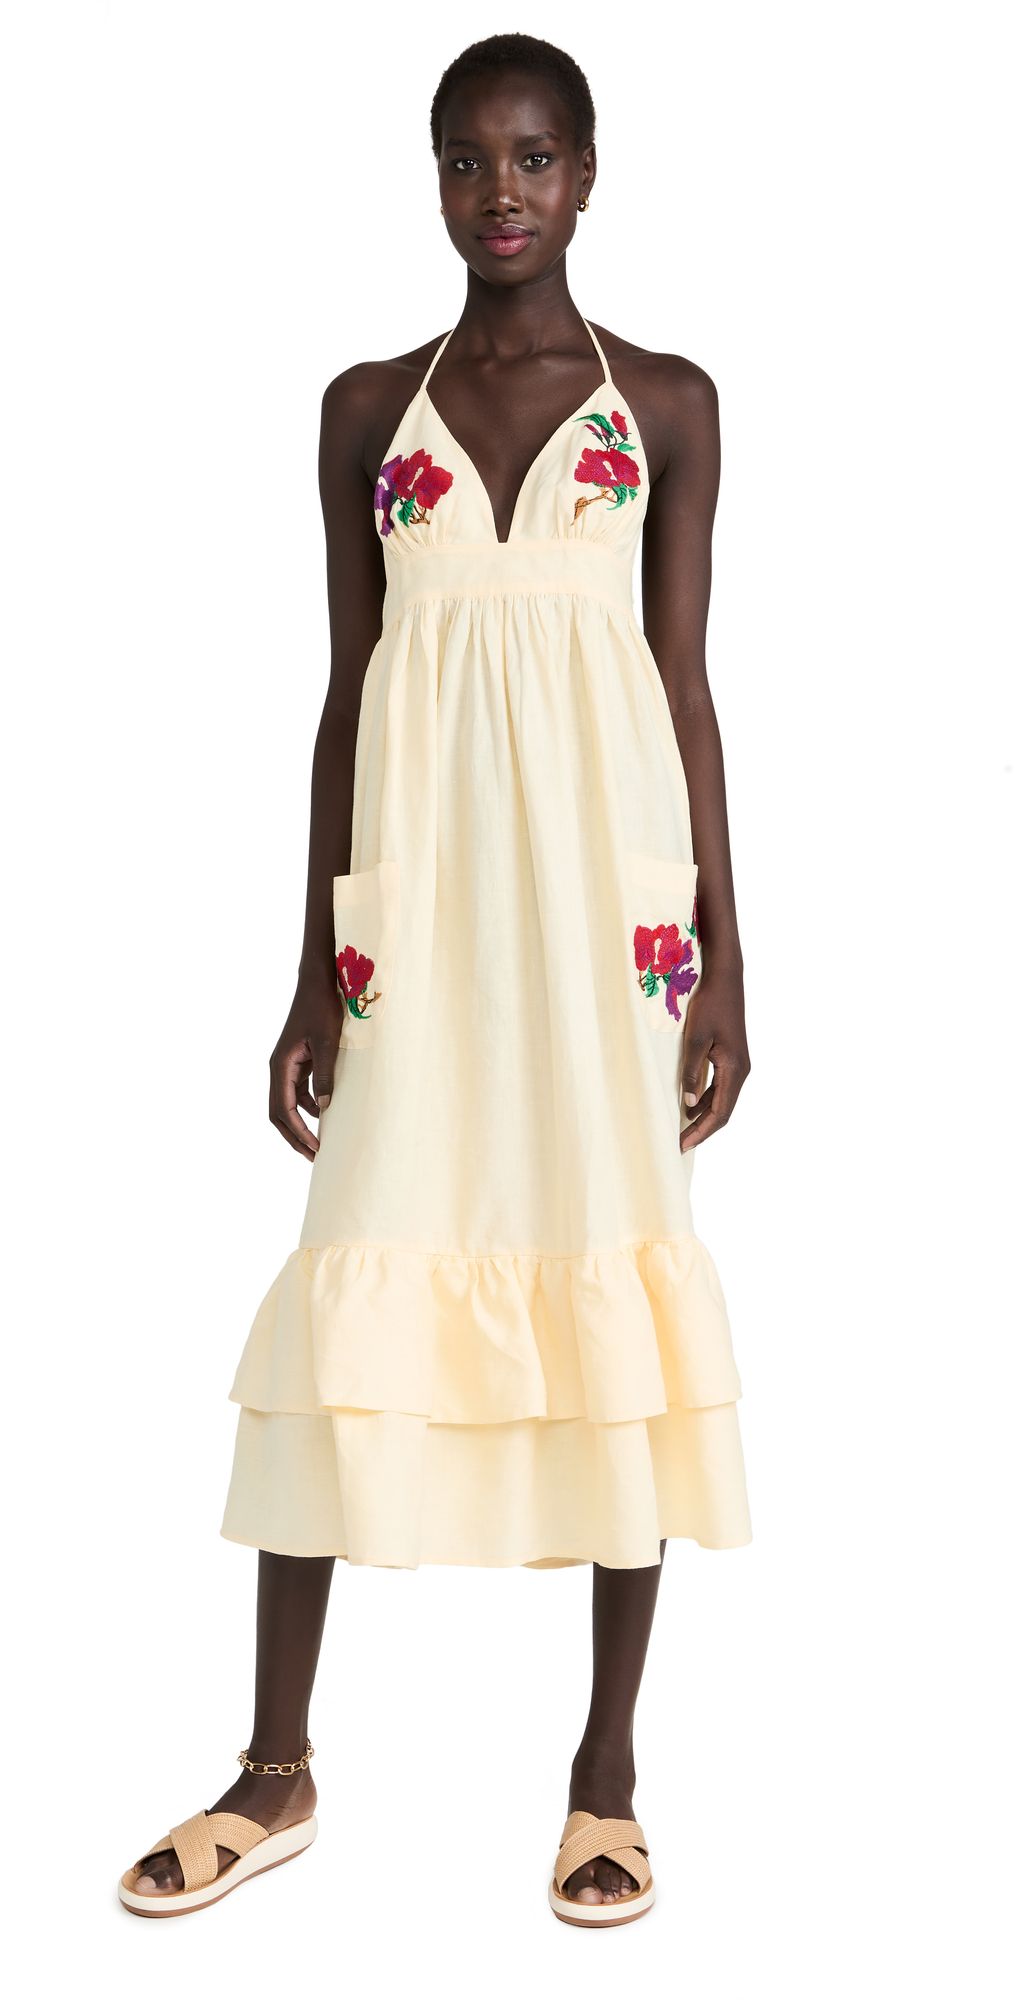 Pamuk Halter Dress Floral Embroidery | Shopbop